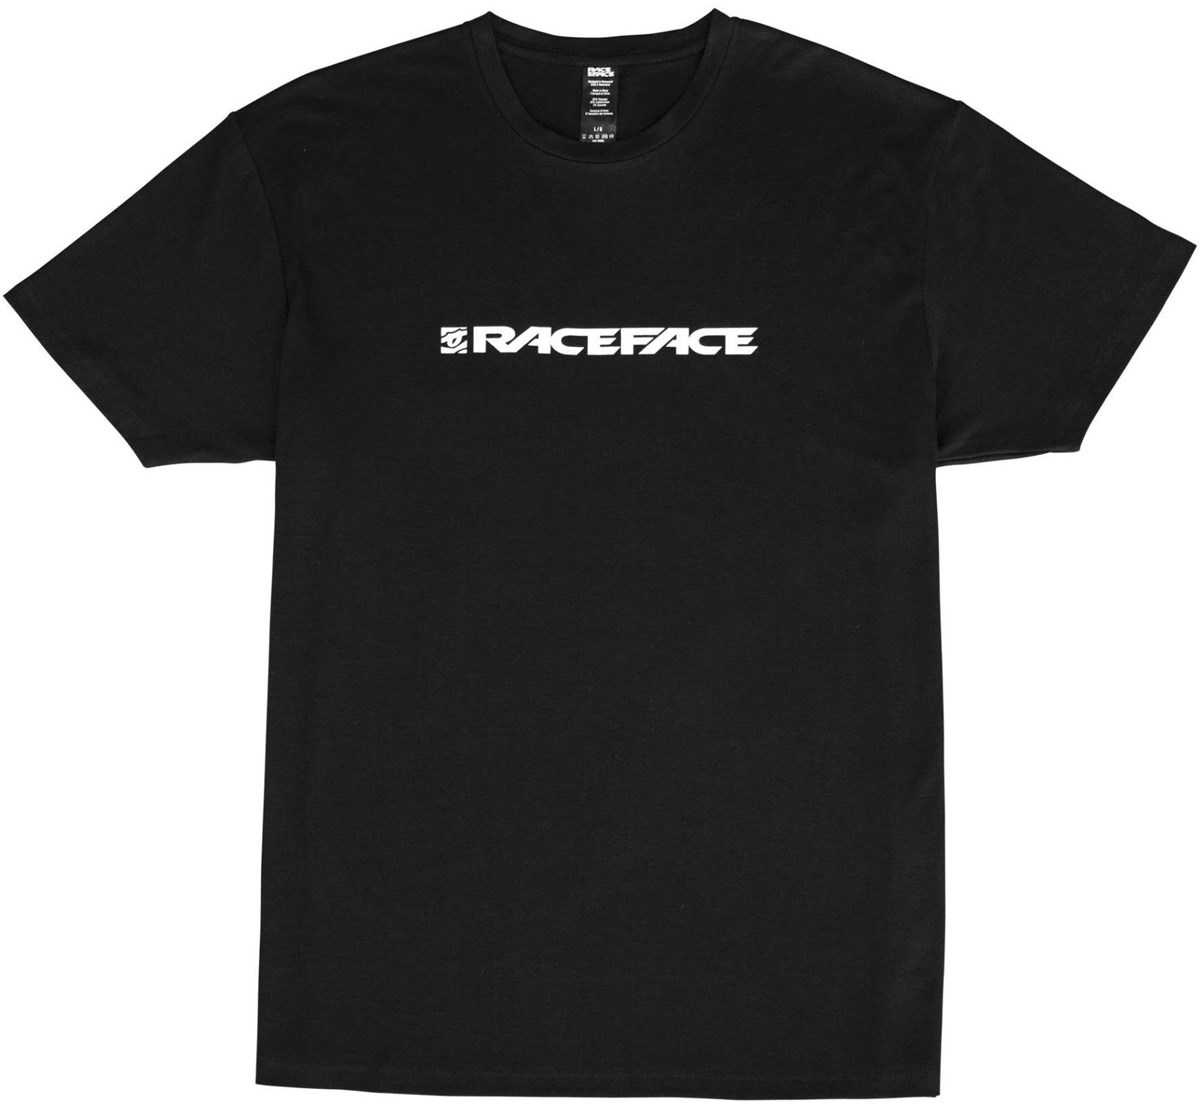 Race Face Classic Logo T-Shirt product image